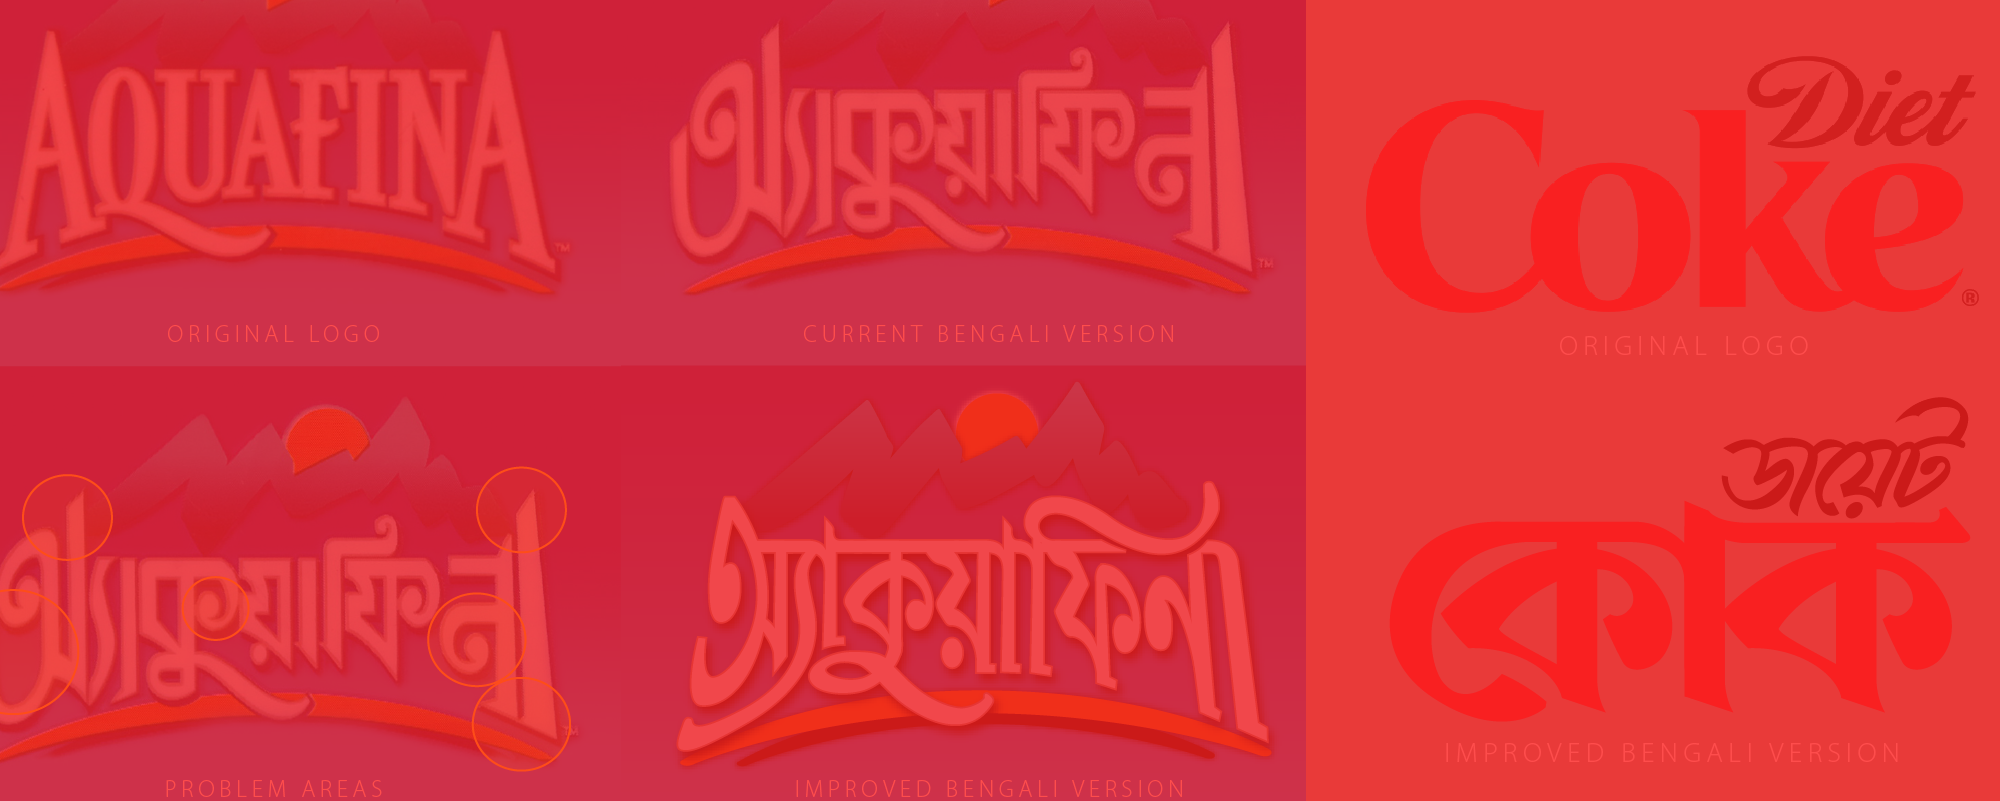 Bengali versions of global brands